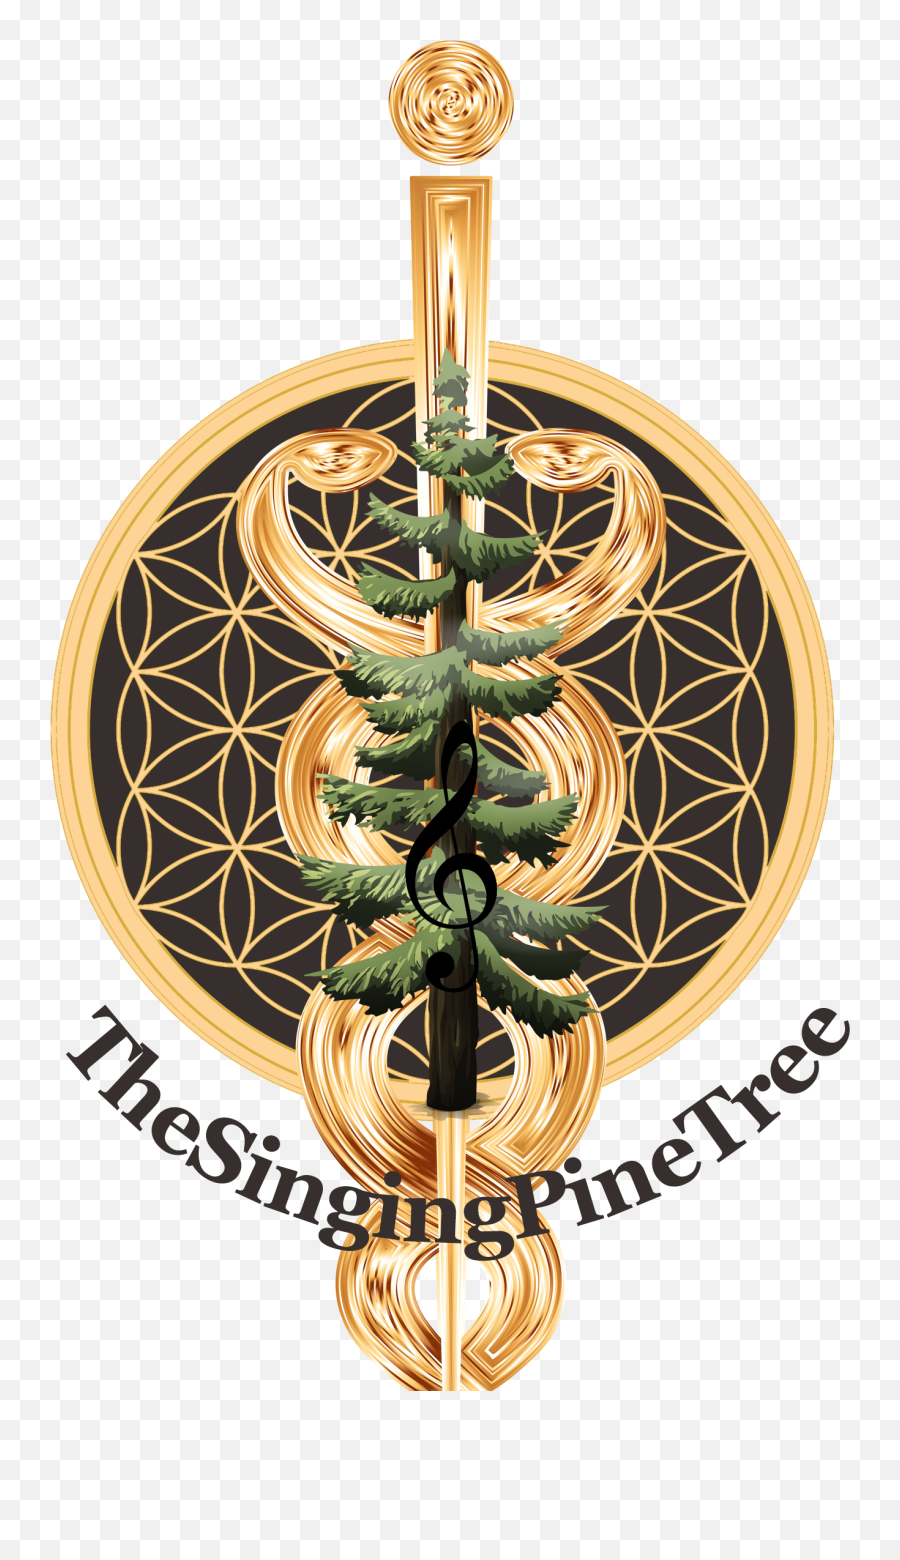 Home - The Singing Pine Tree Png,Pine Tree Logo